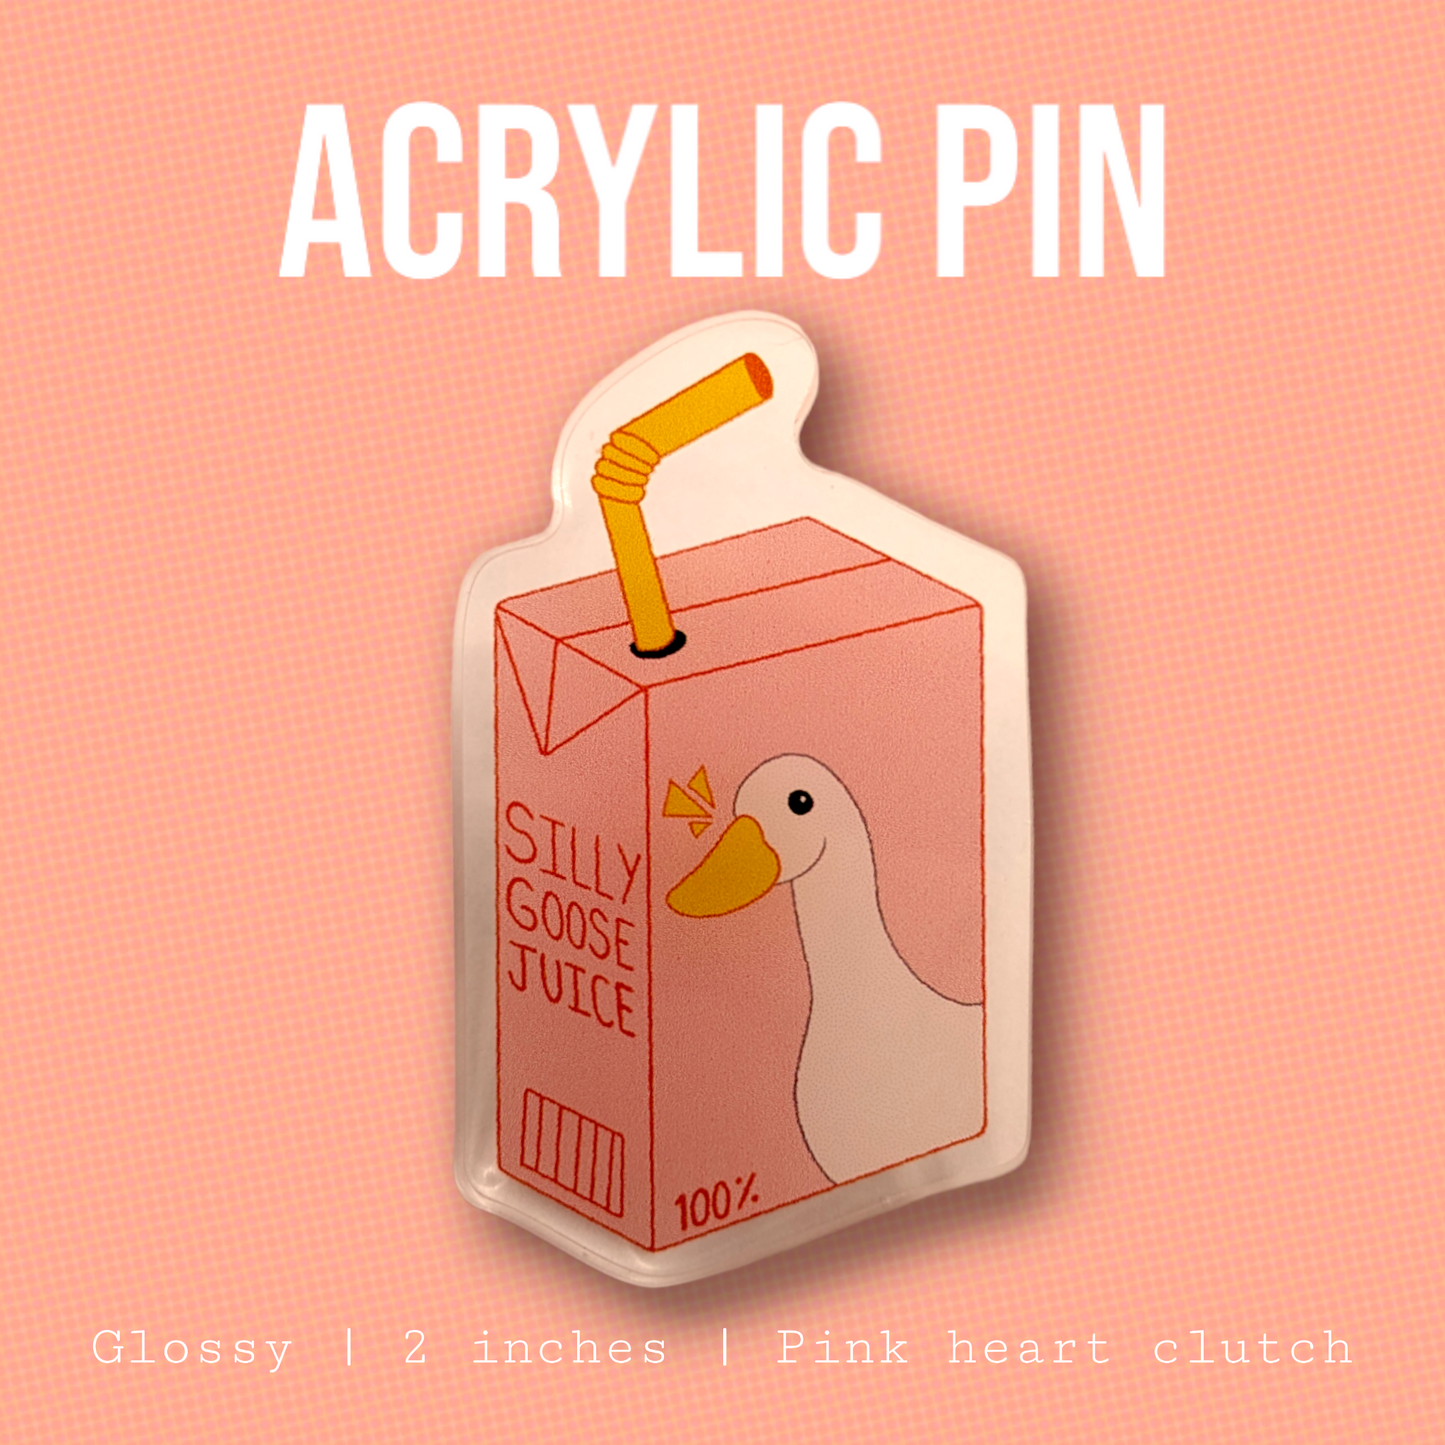 Silly Goose Juice! - Acrylic Pin